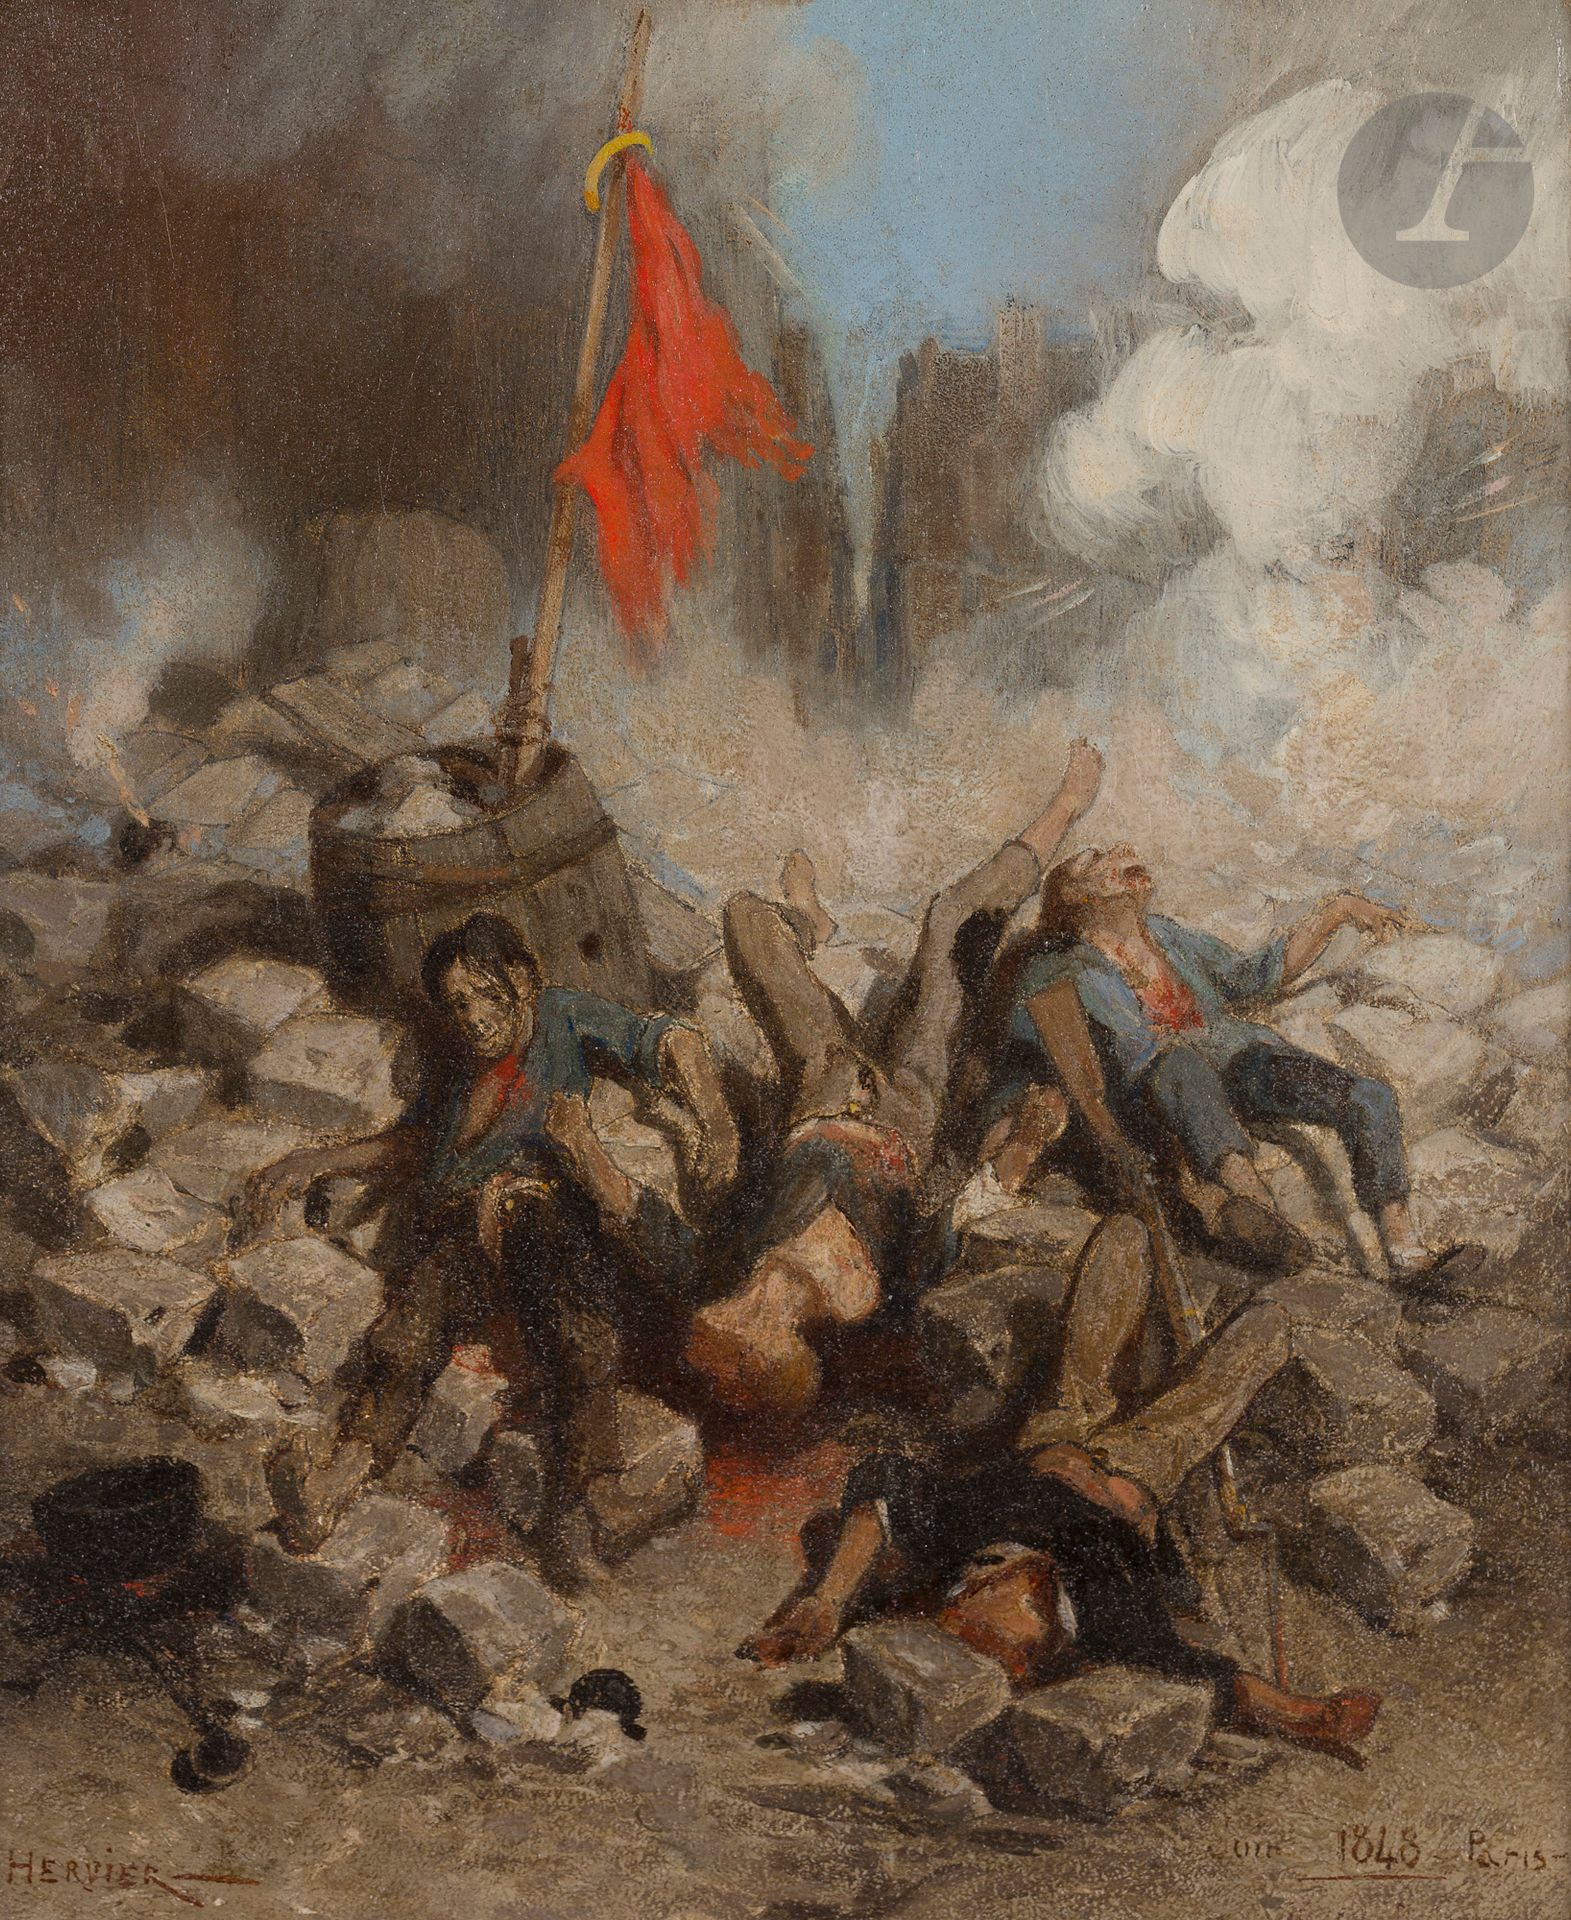 Null Louis-Adolphe HERVIER (París, 1818 - 1879)
La Barricada, 1848
Óleo sobre ta&hellip;